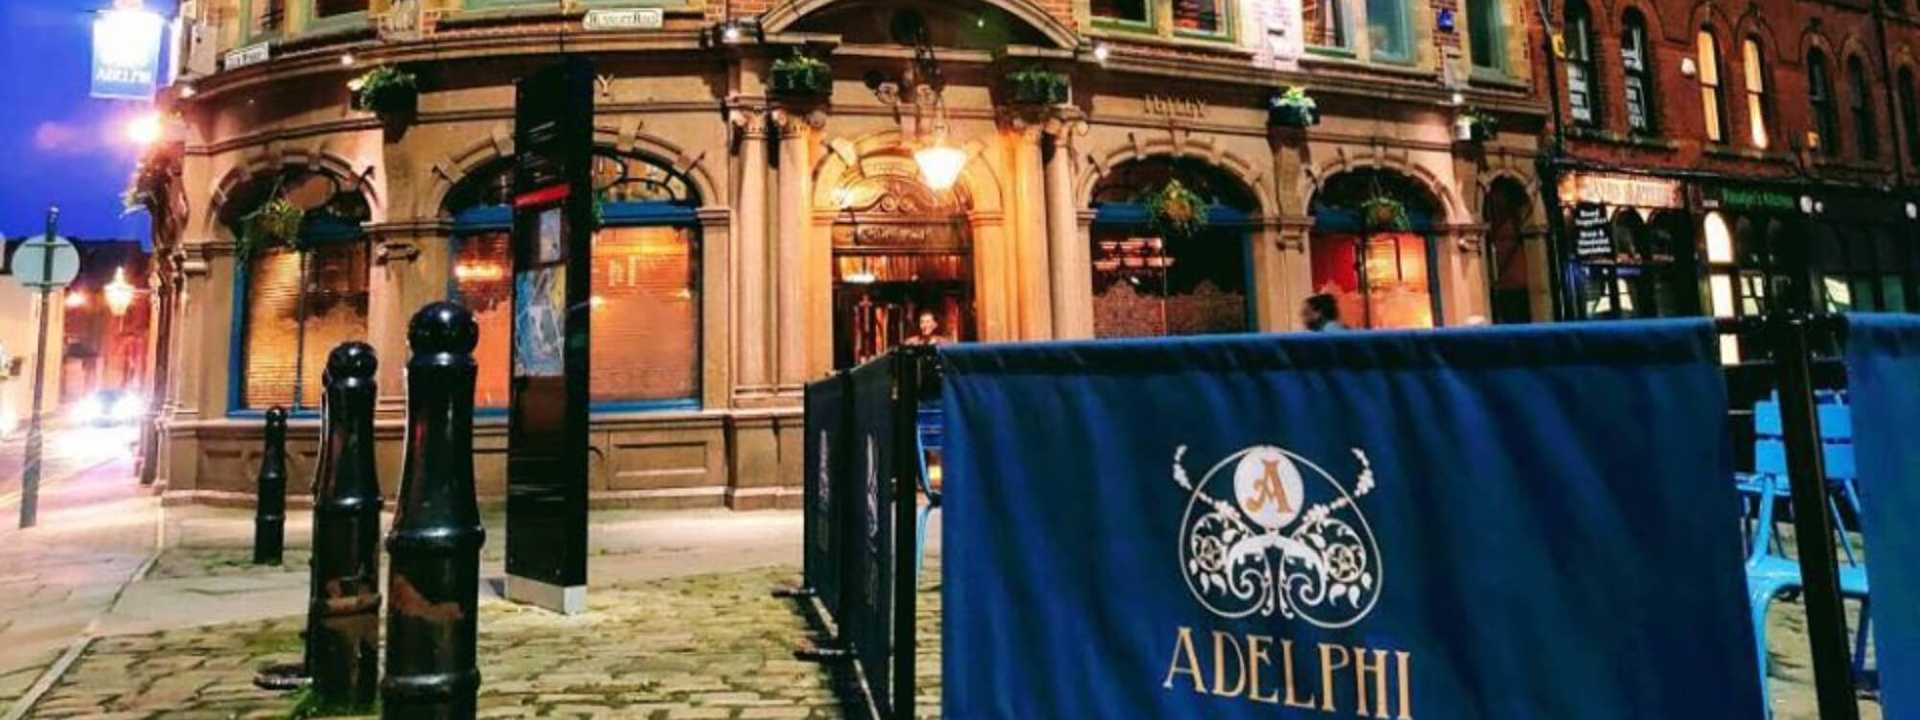 The Adelphi Pub Leeds